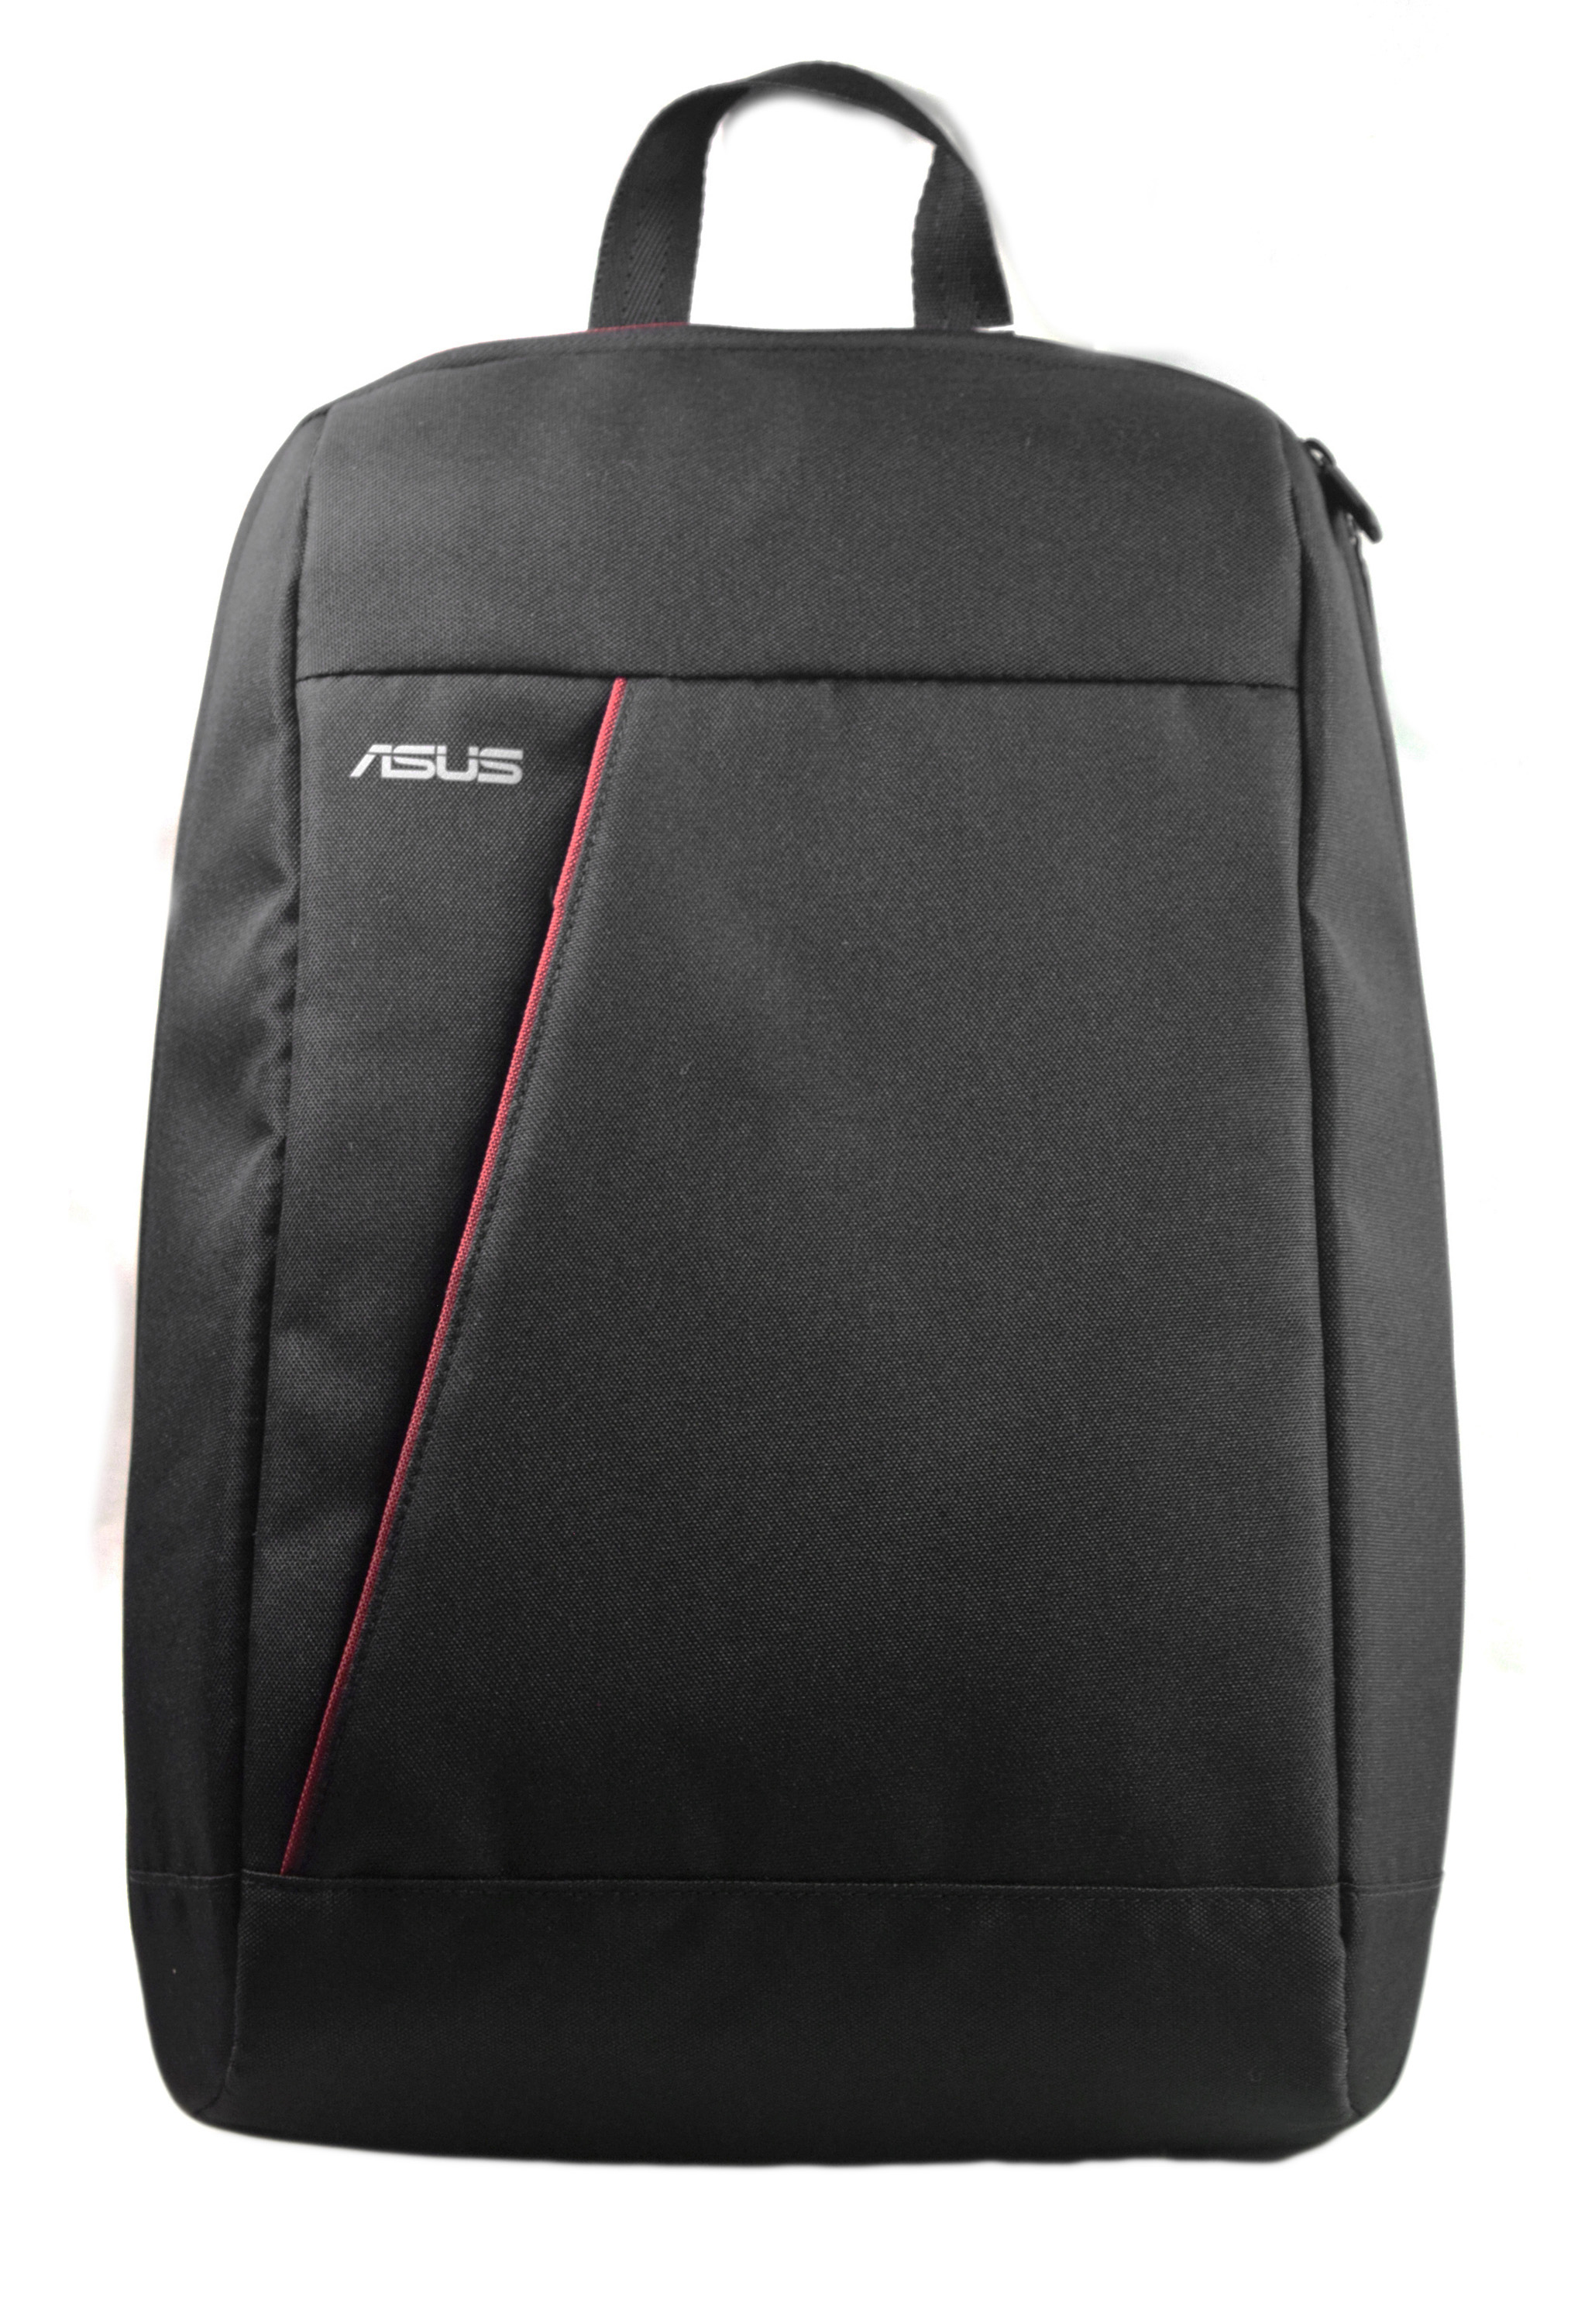 Asustek - Notebook & Pda Accs    Asus Nereusbackpack                 Fits Up To 16in Laptops             90-xb4000ba00060